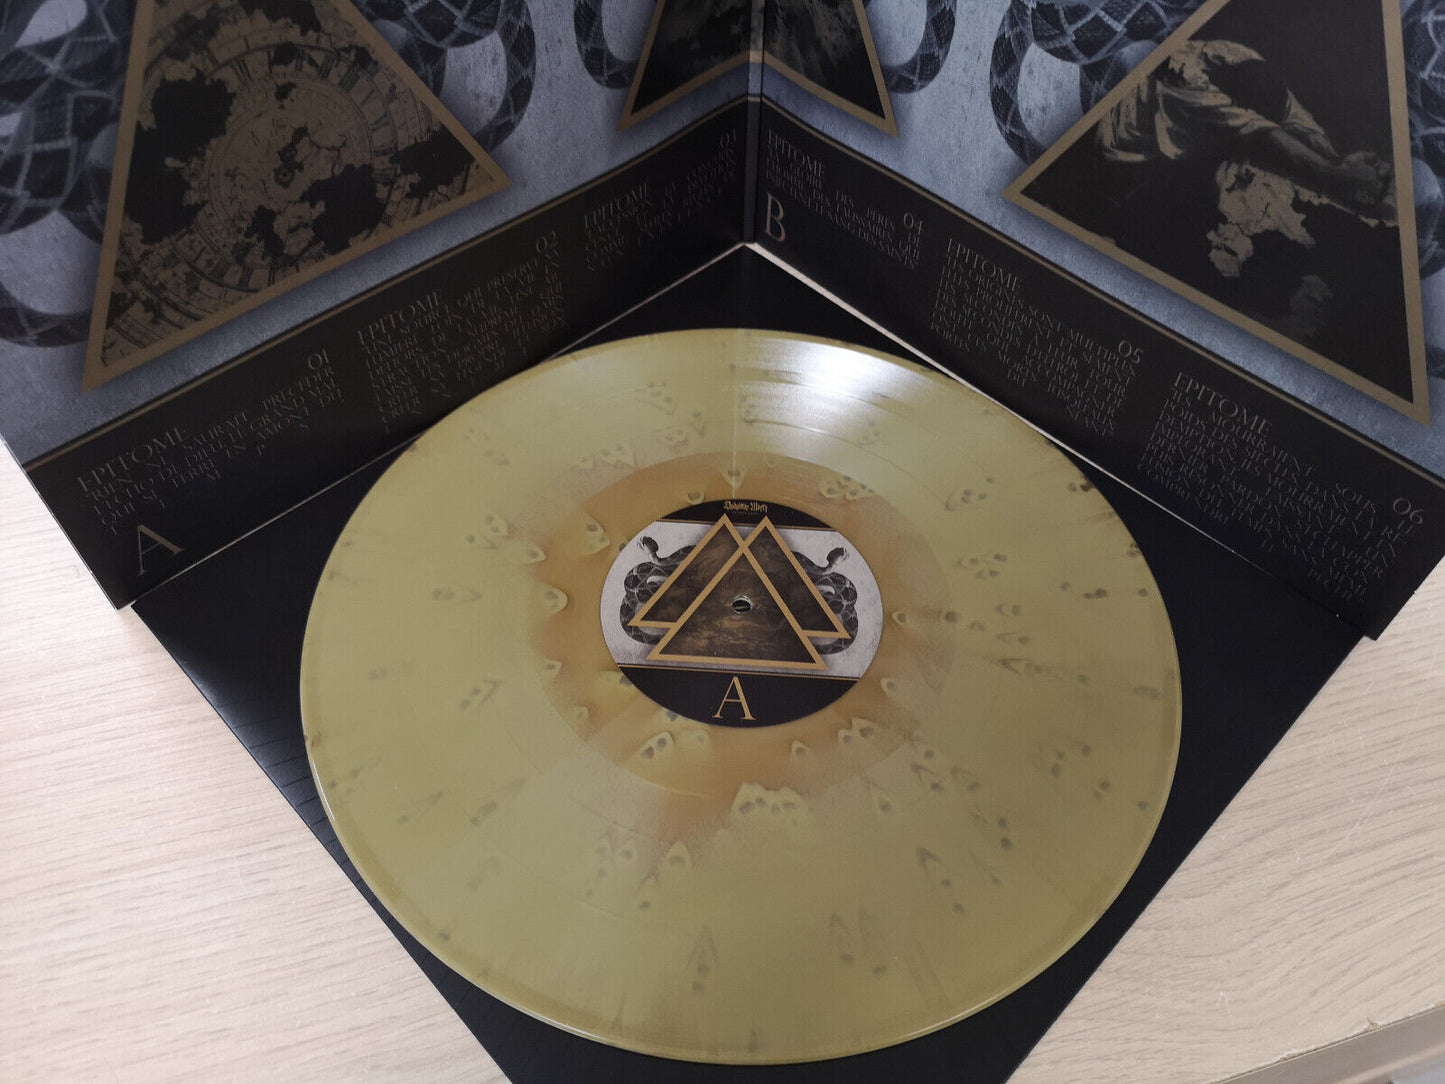 Blut Aus Nord "777 Sect(s)" NEW Gold Vinyl